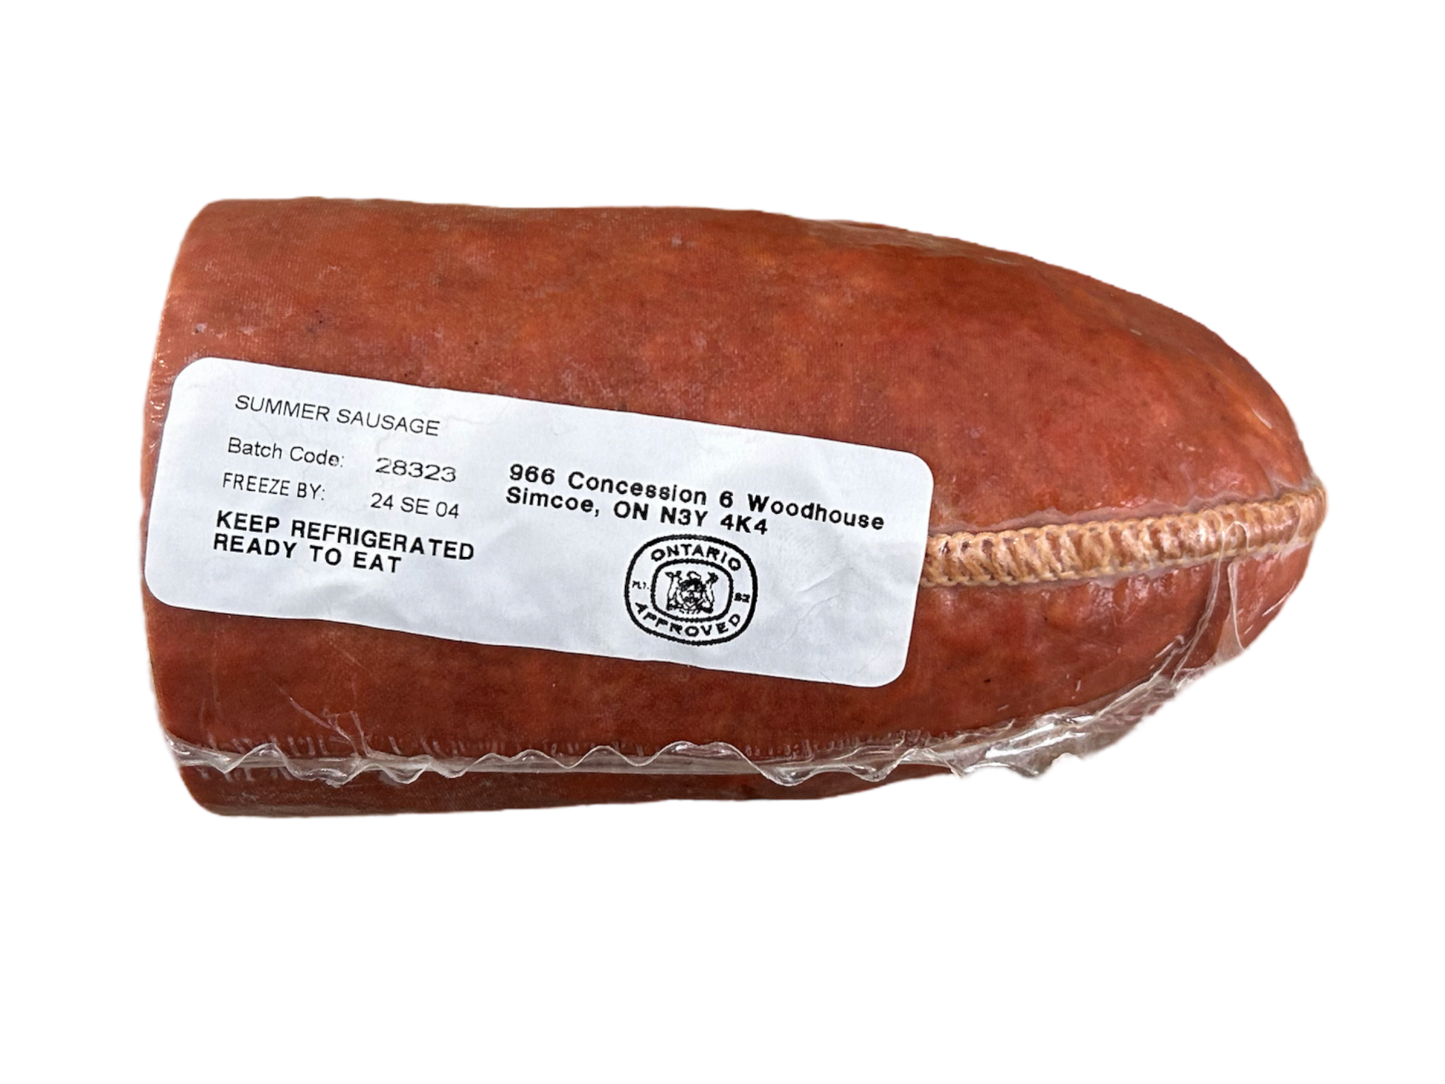 Summer Sausage - VG meats